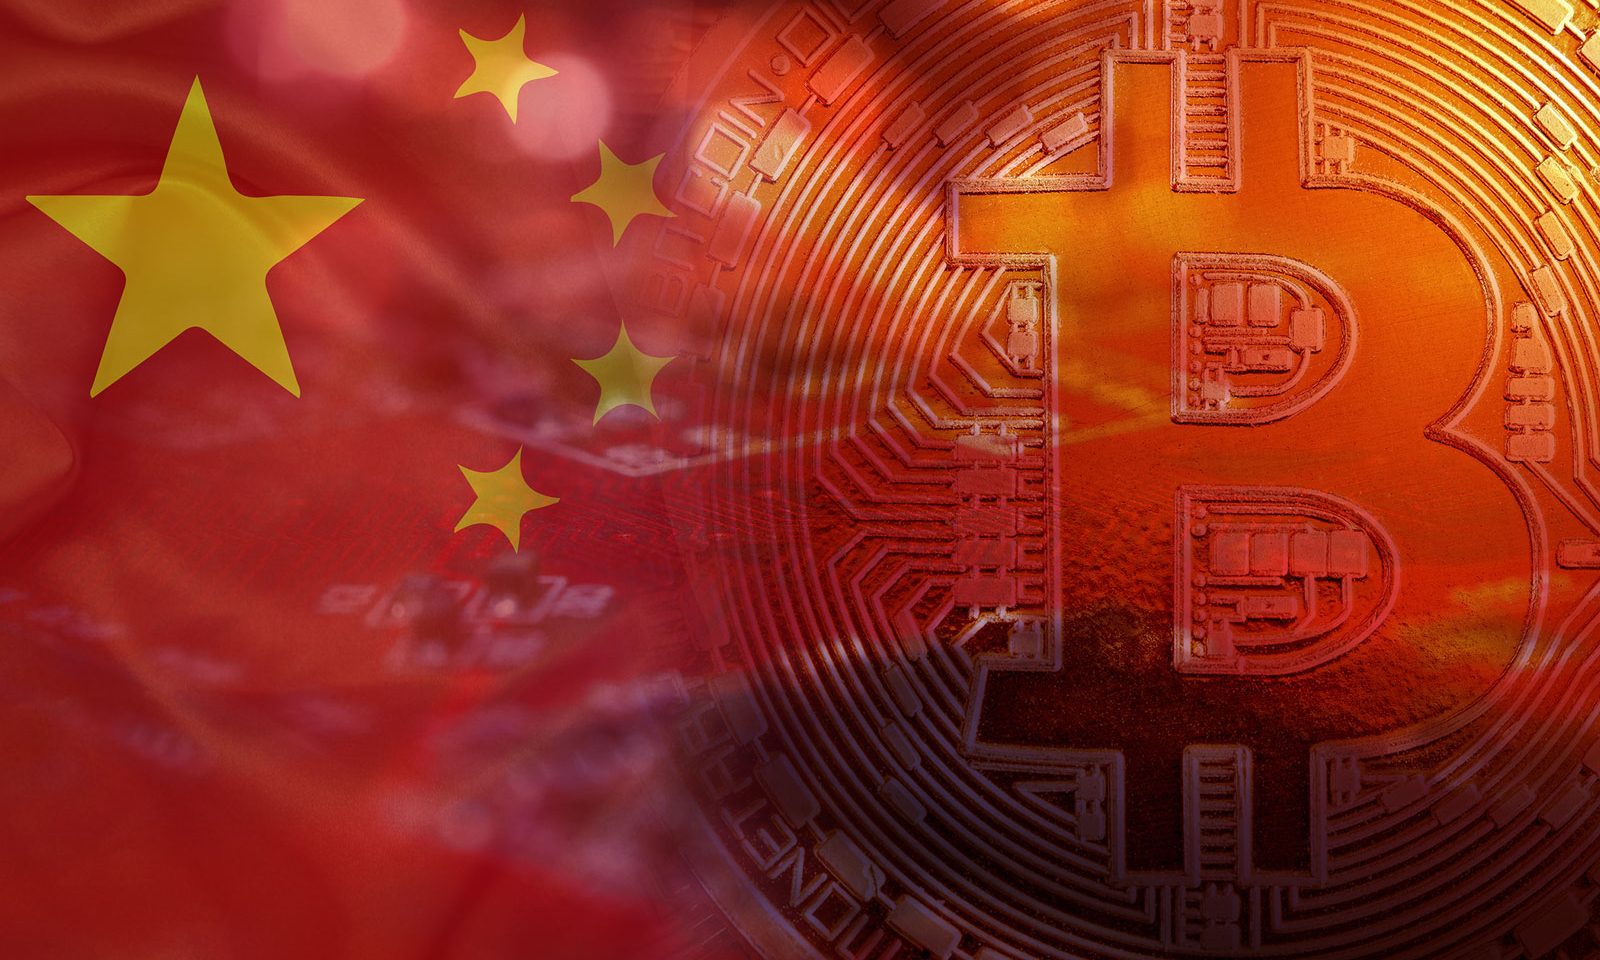 China proíbe a mídia e estabelecimentos de discutir sobre criptomoedas